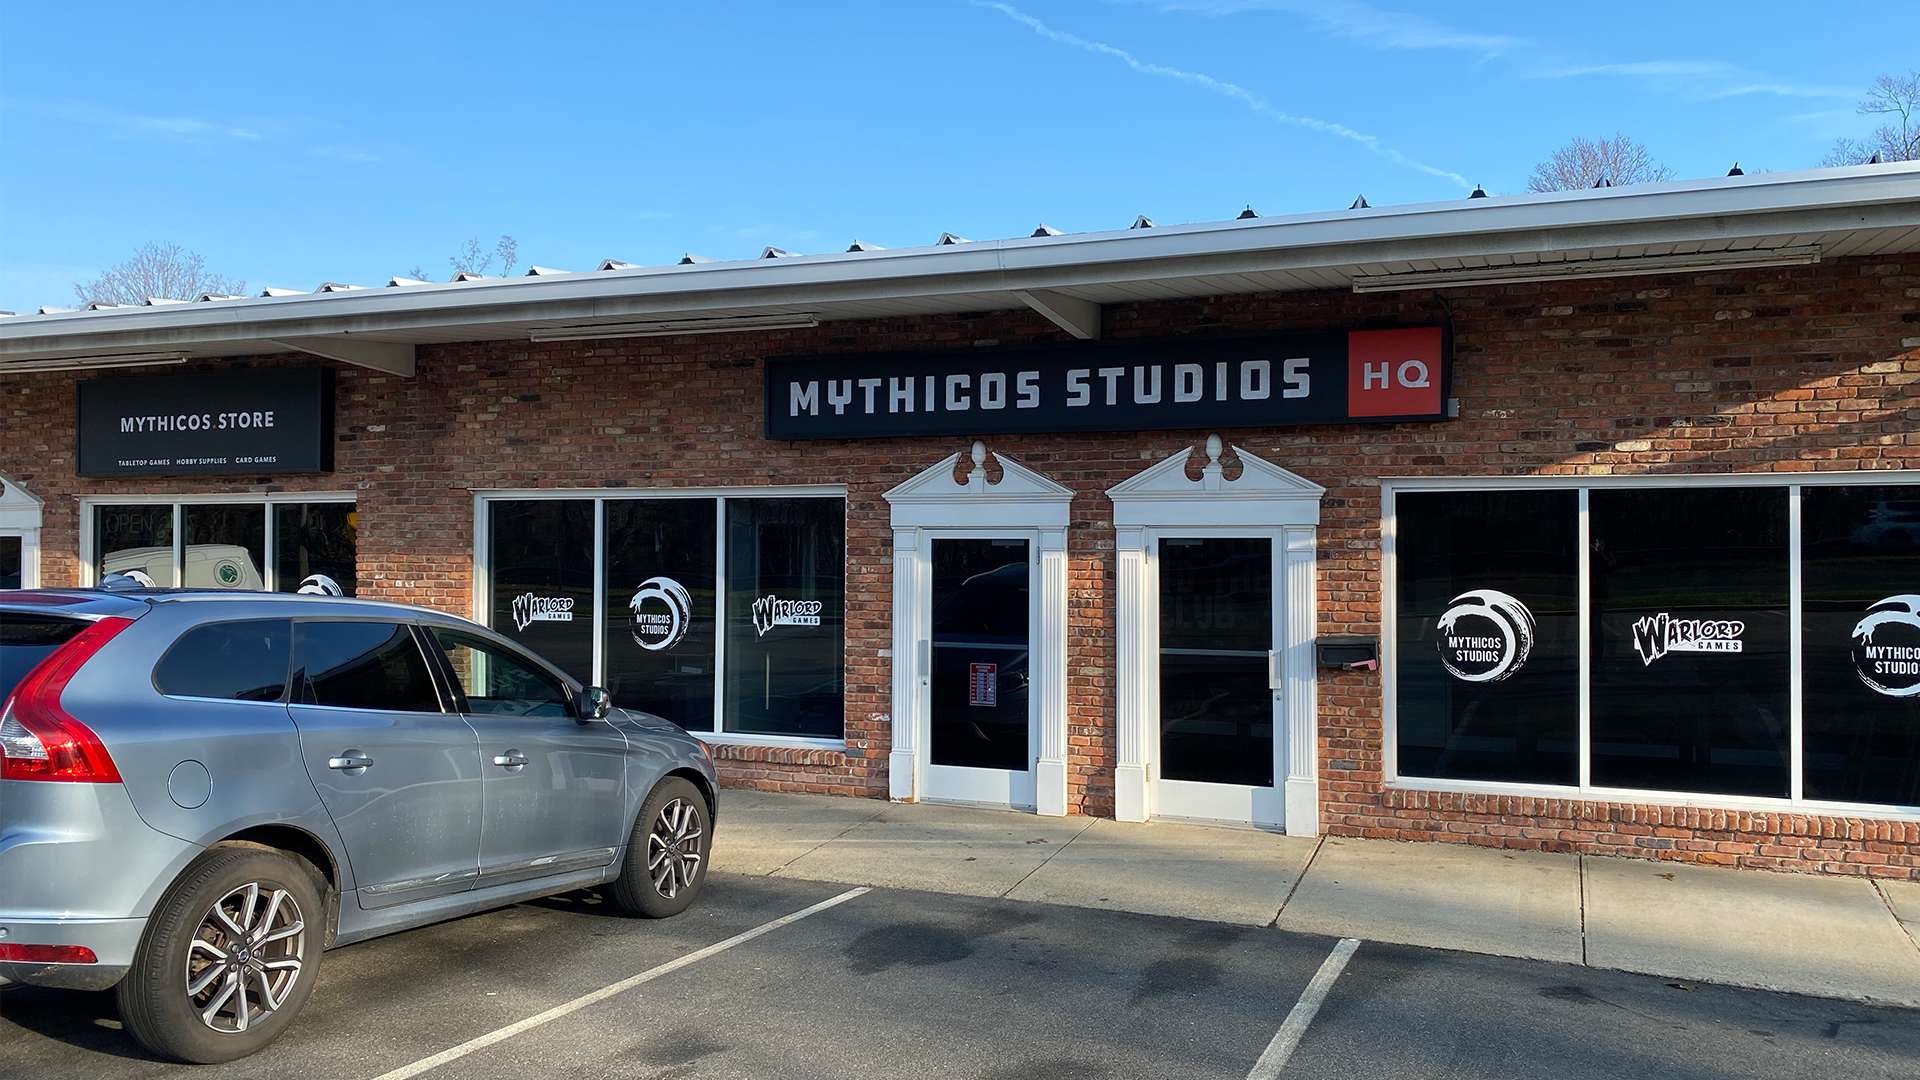 Mythicos Studios - HQ